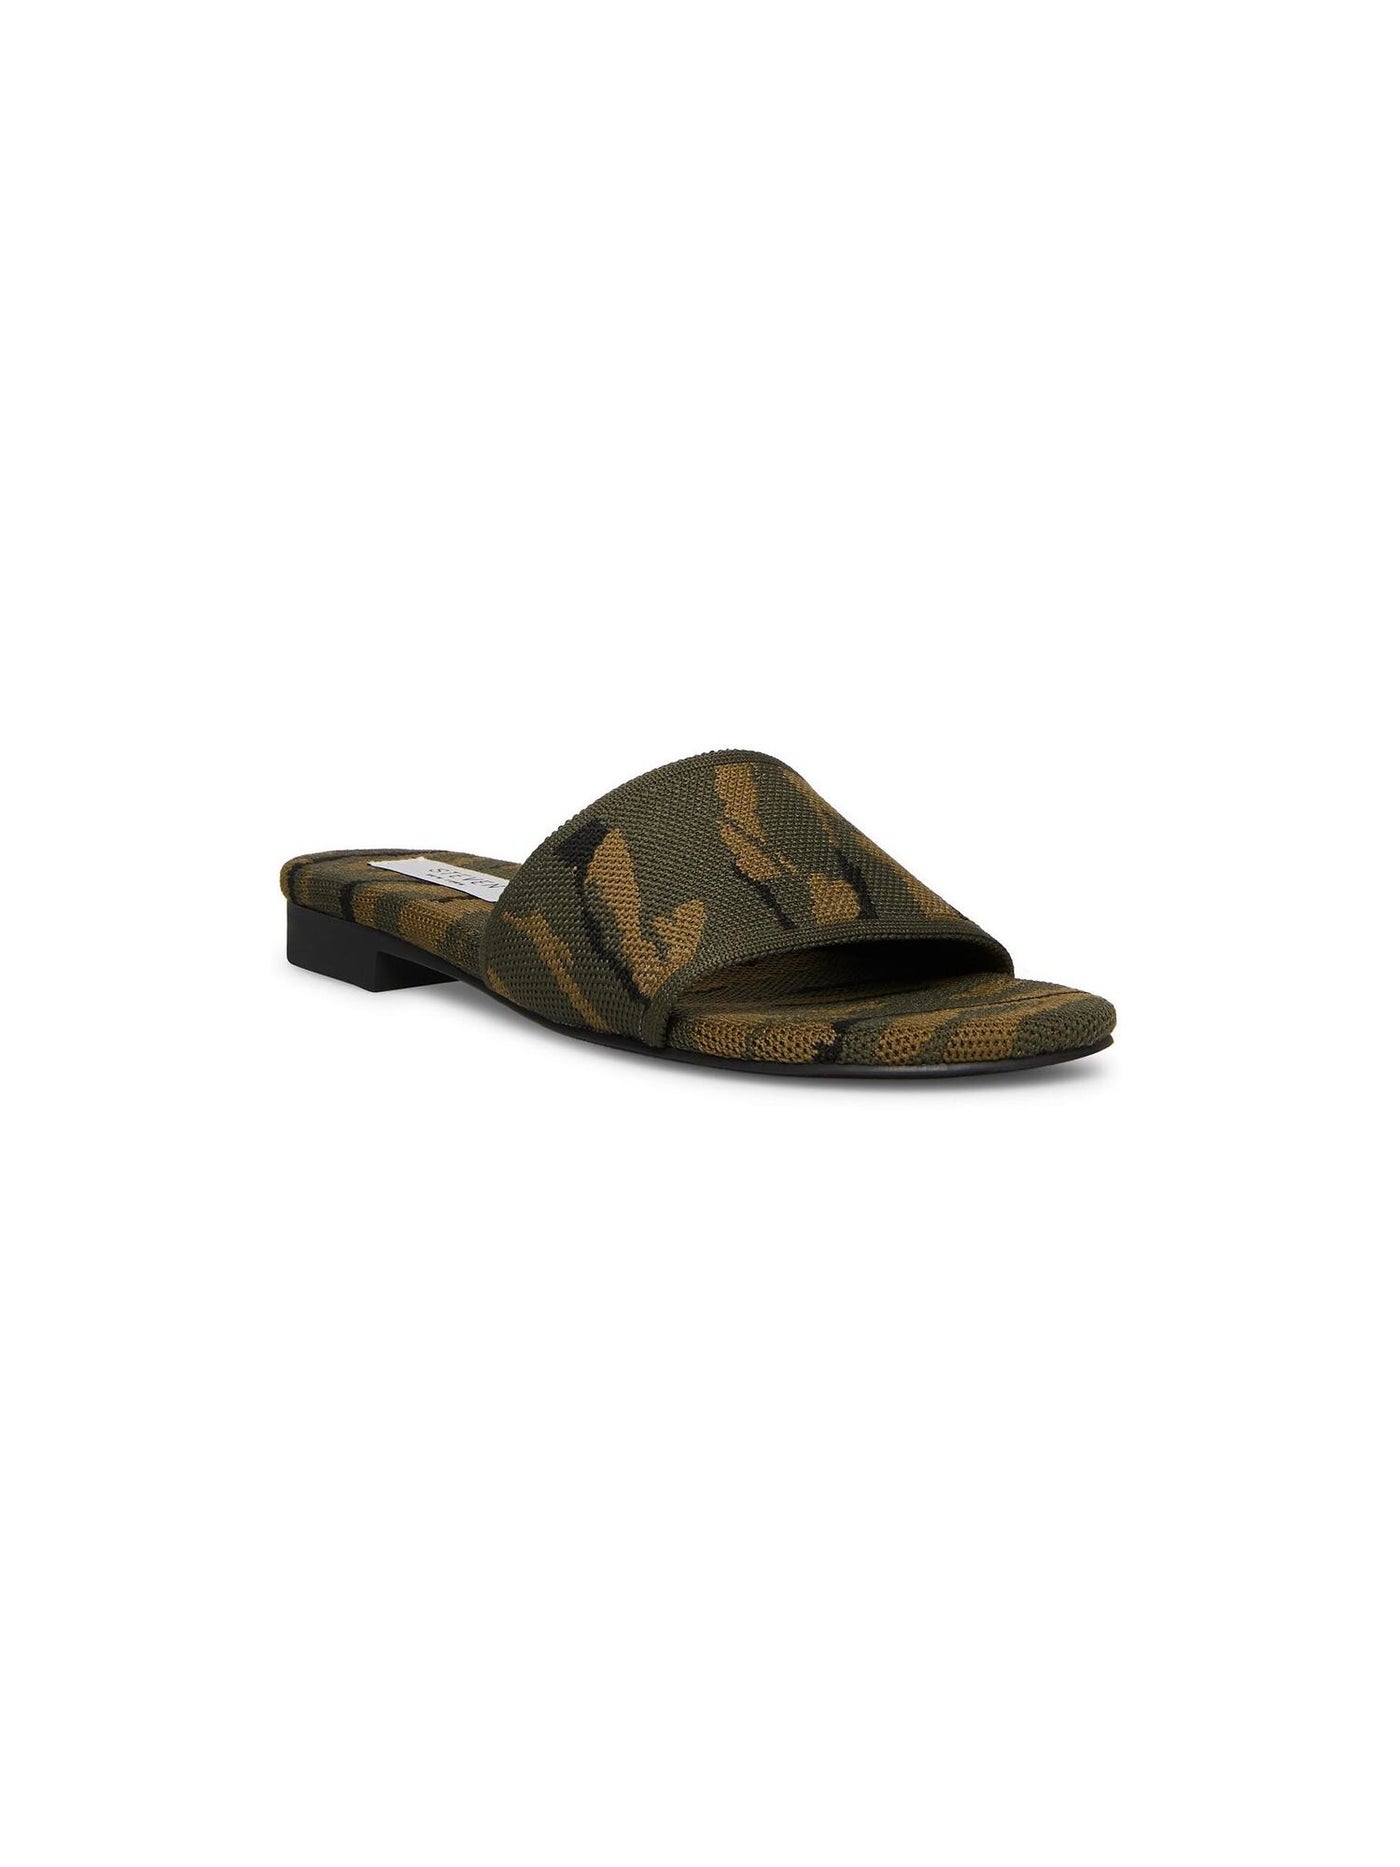 STEVEN Womens Green Camouflage Padded Comfort Saffira Round Toe Block Heel Slide Sandals Shoes 6.5 M